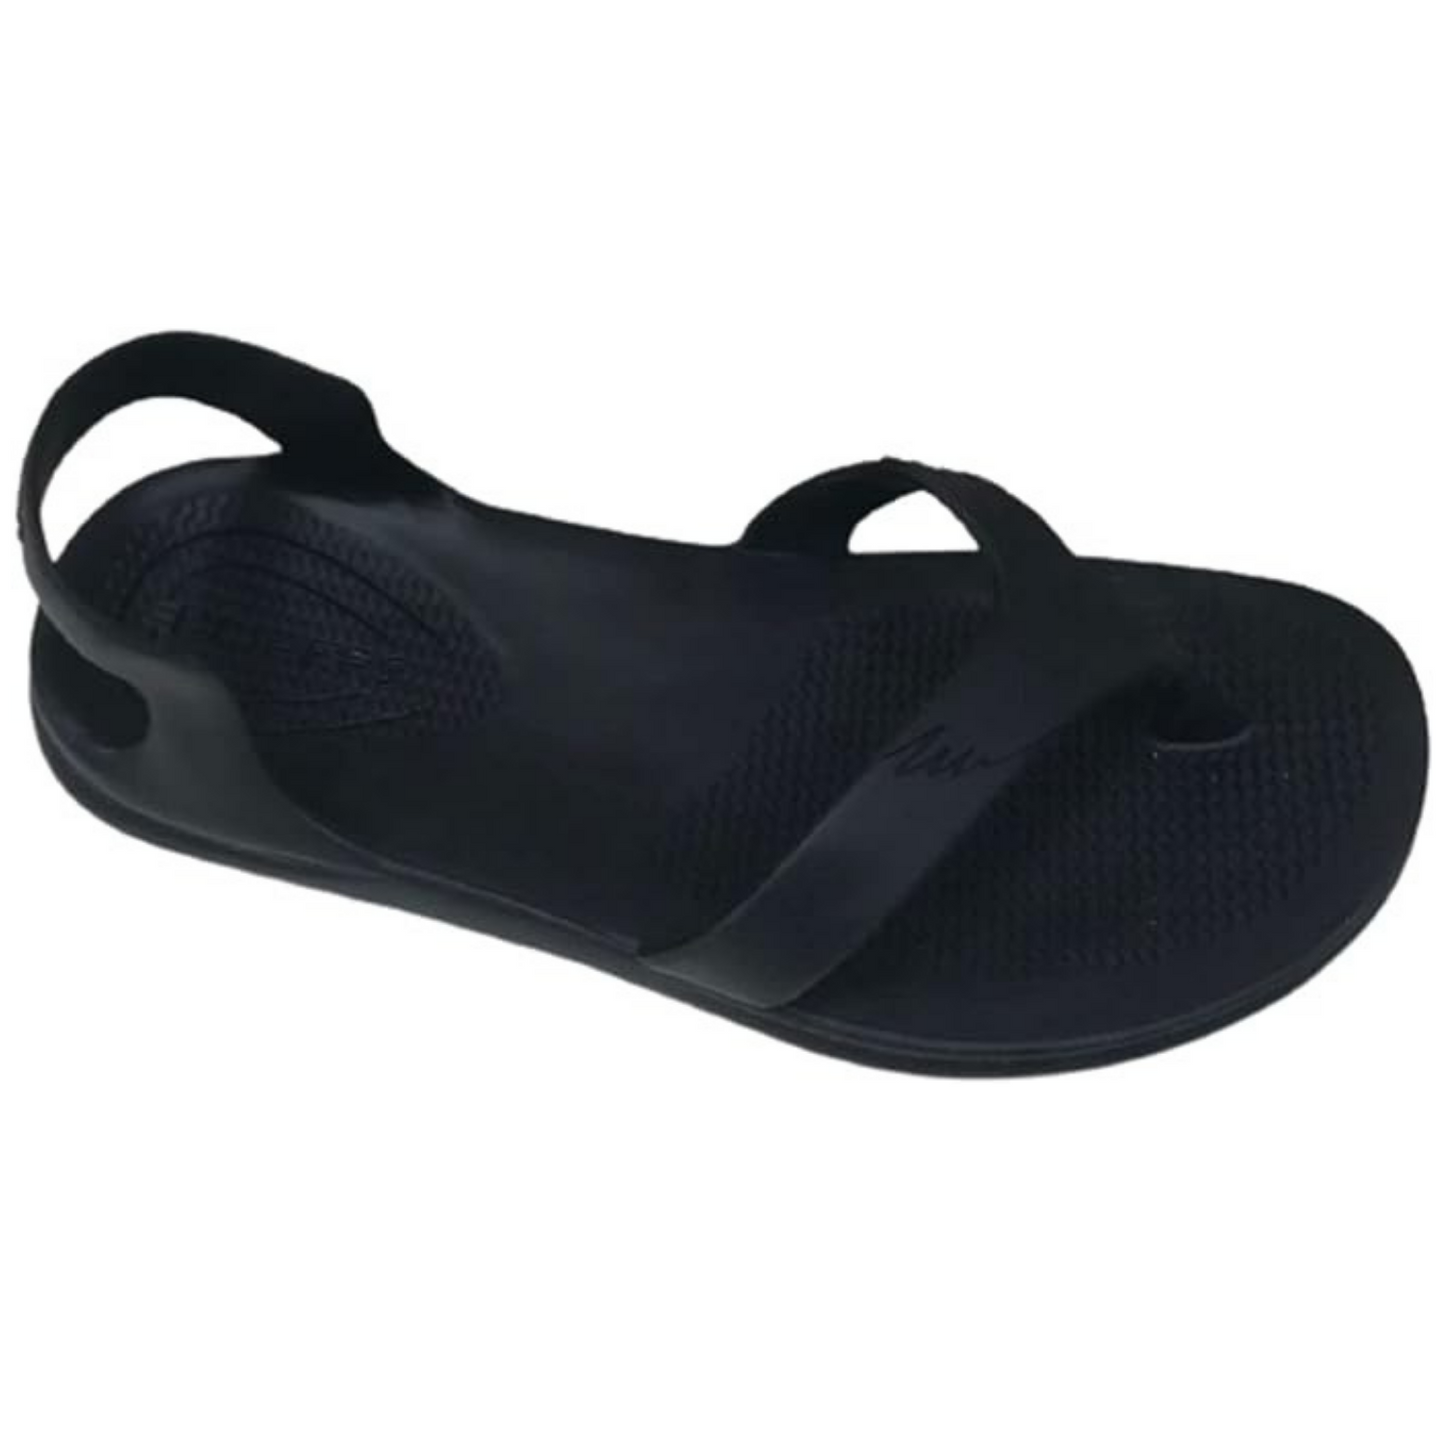 Sandalo infradito Blipers